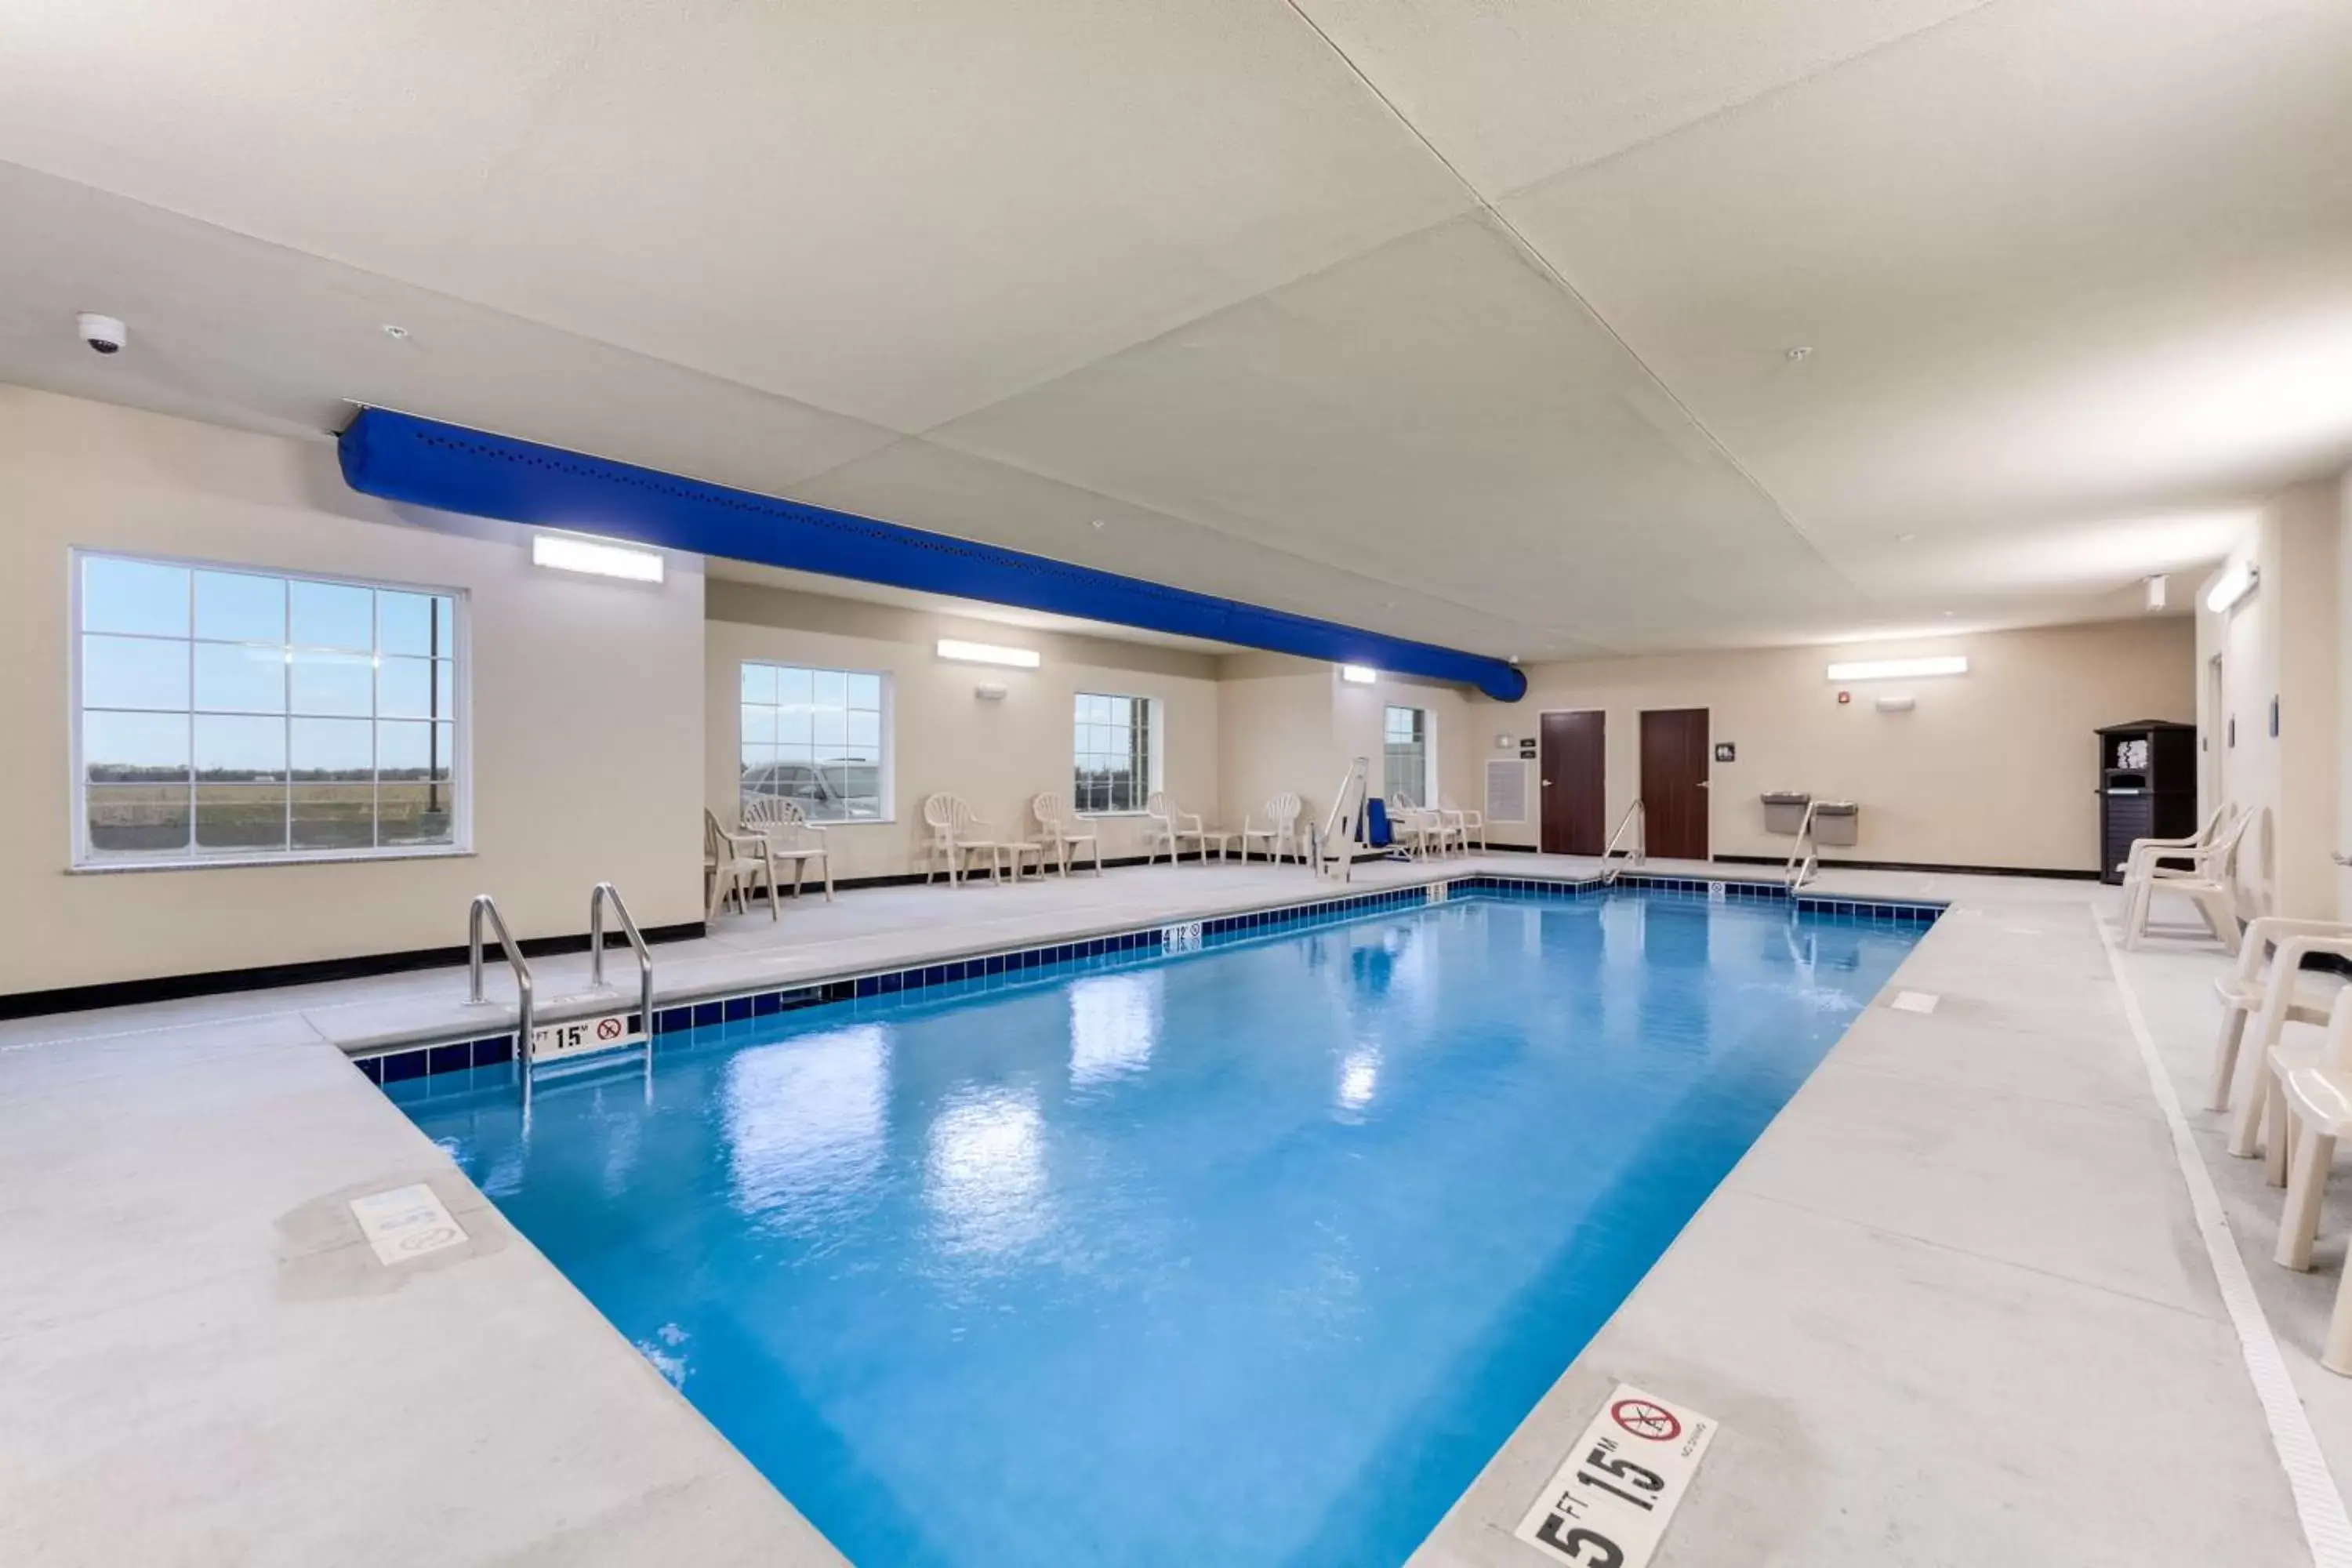 Swimming pool in Cobblestone Hotel & Suites - Cozad